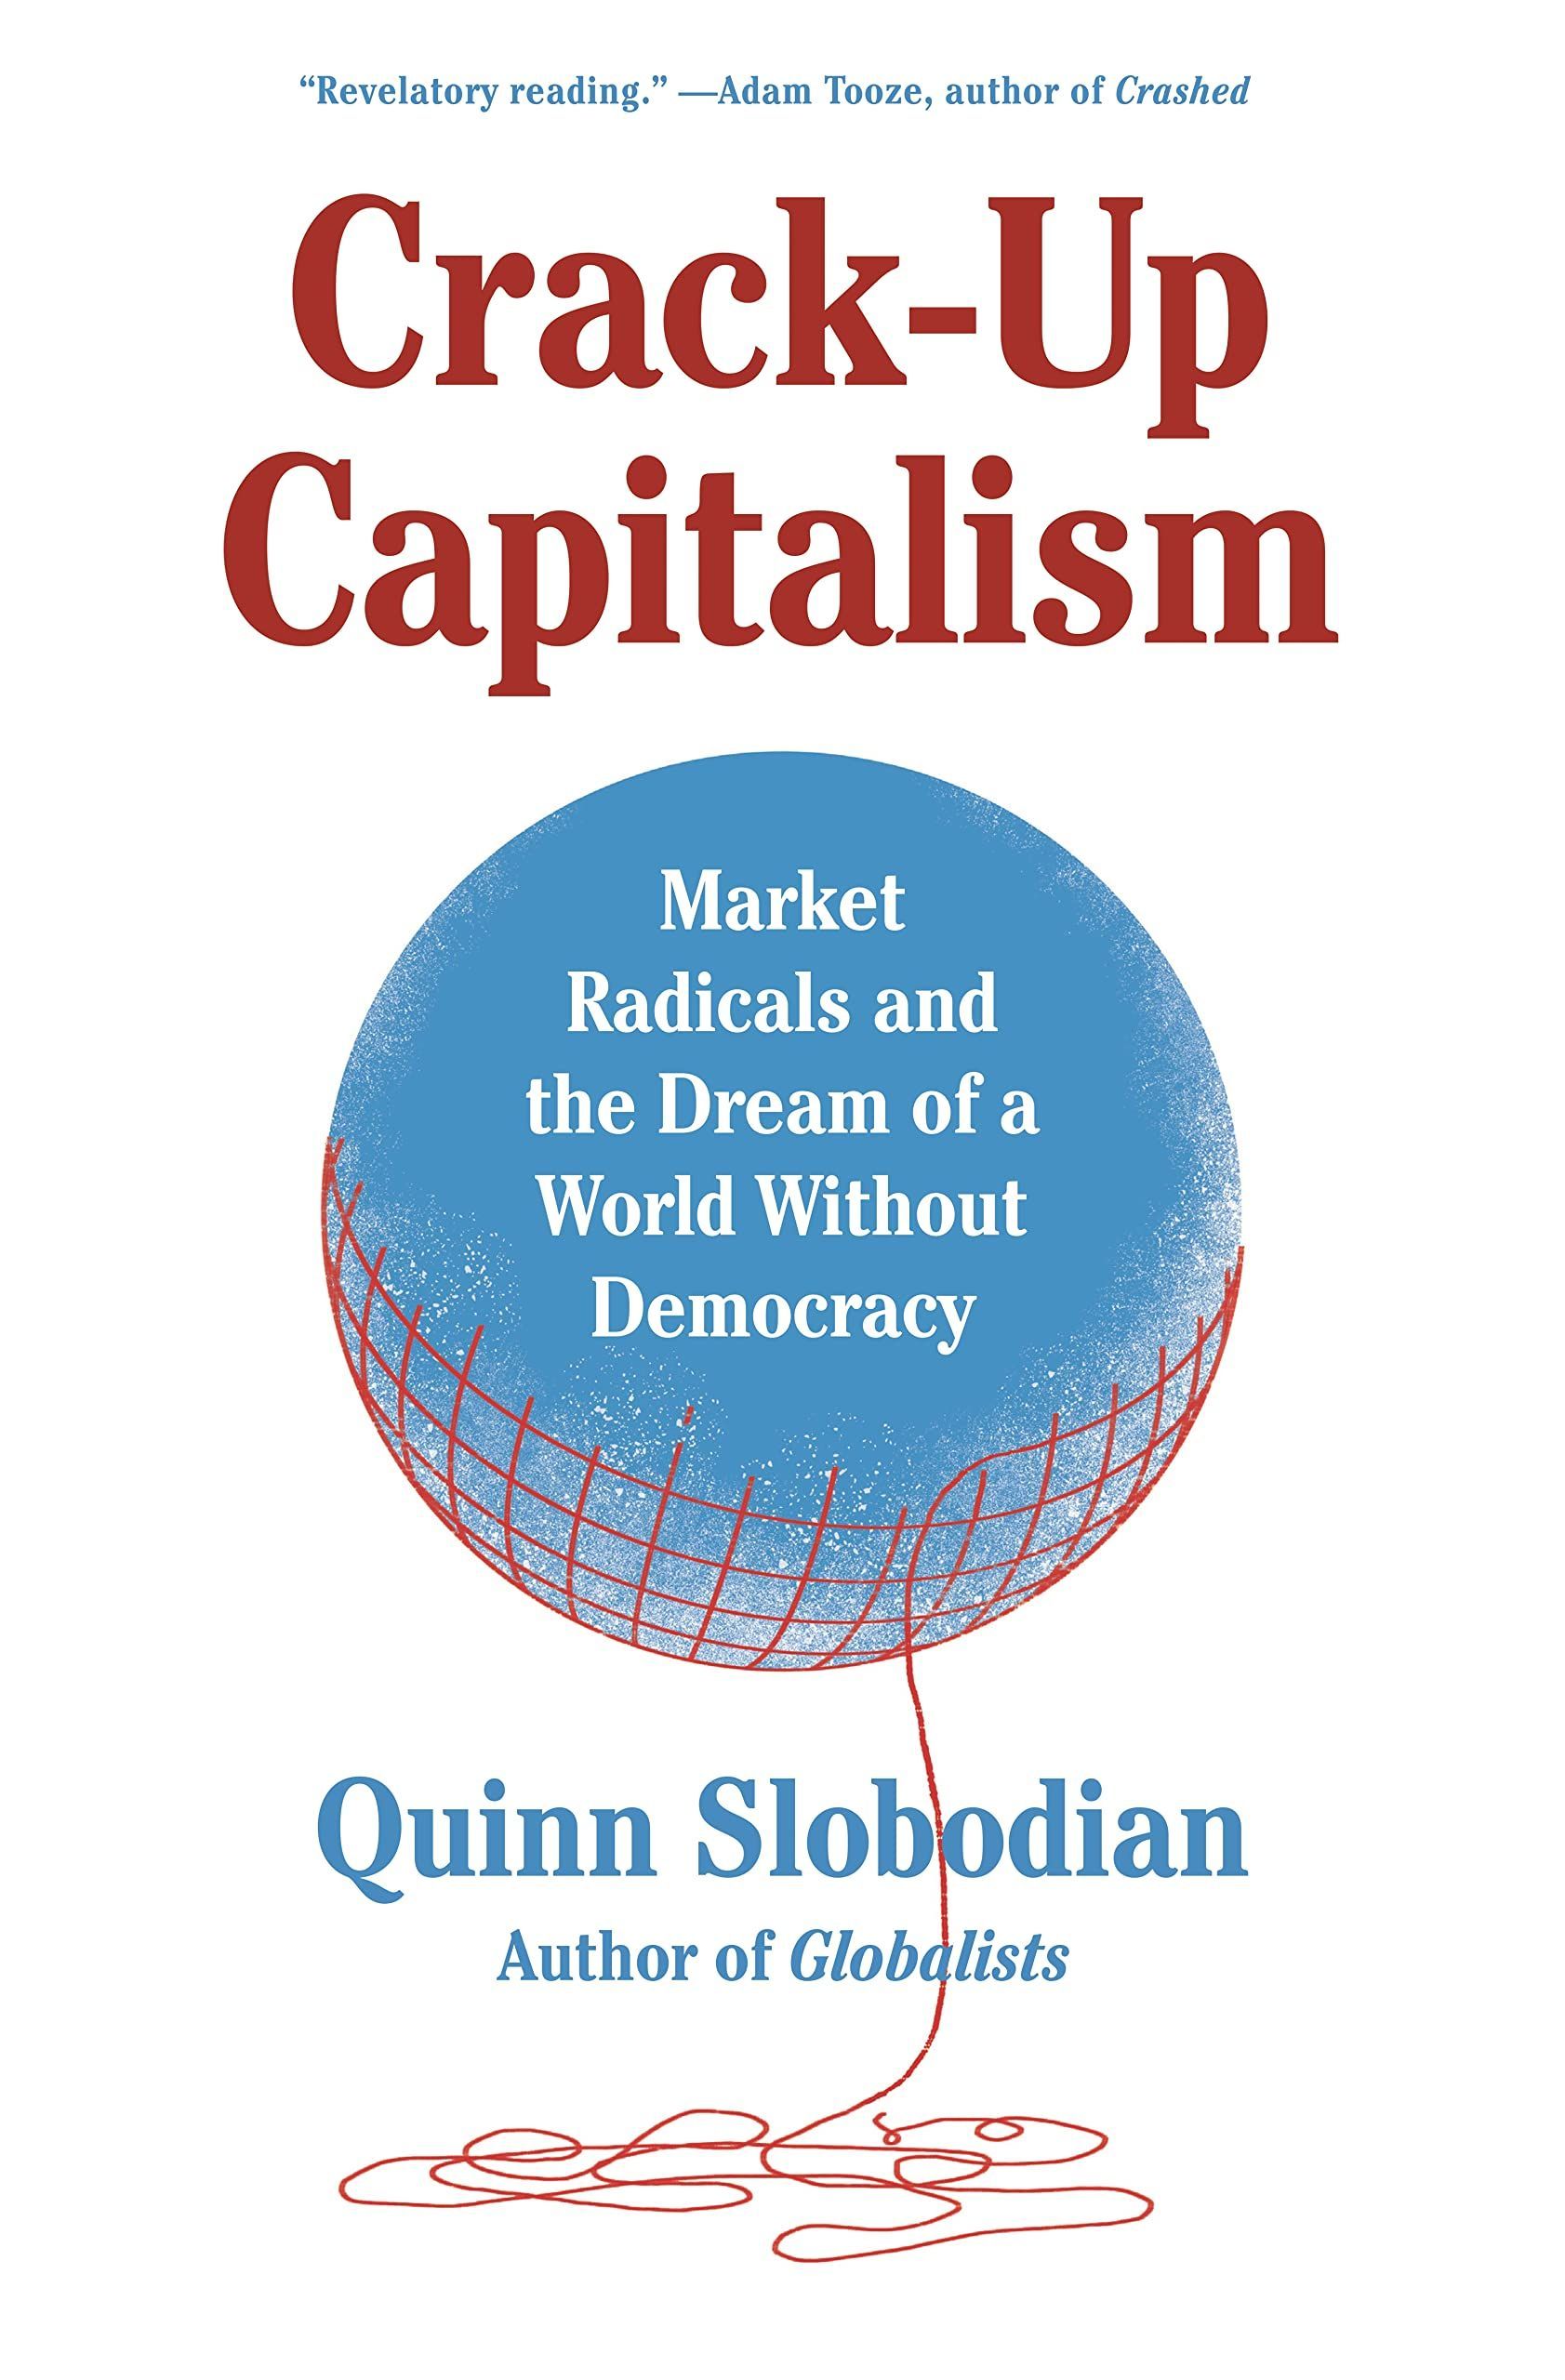 Feudalism by Design: On Quinn Slobodian’s “Crack-Up Capitalism”